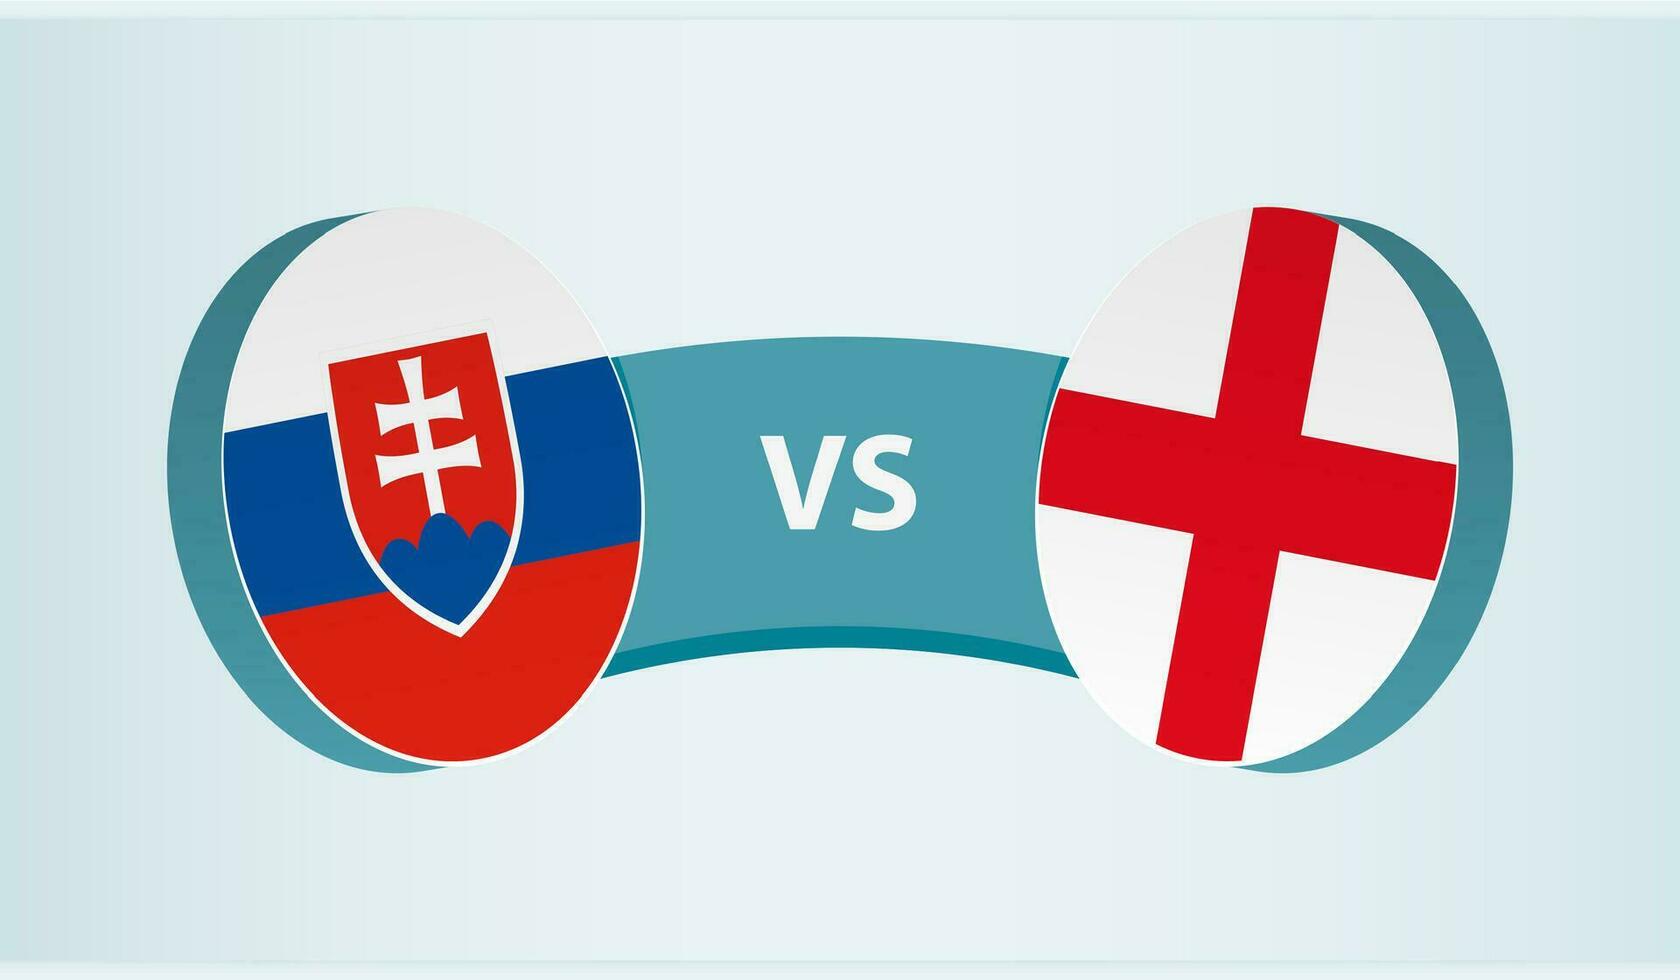 slovakia mot England, team sporter konkurrens begrepp. vektor